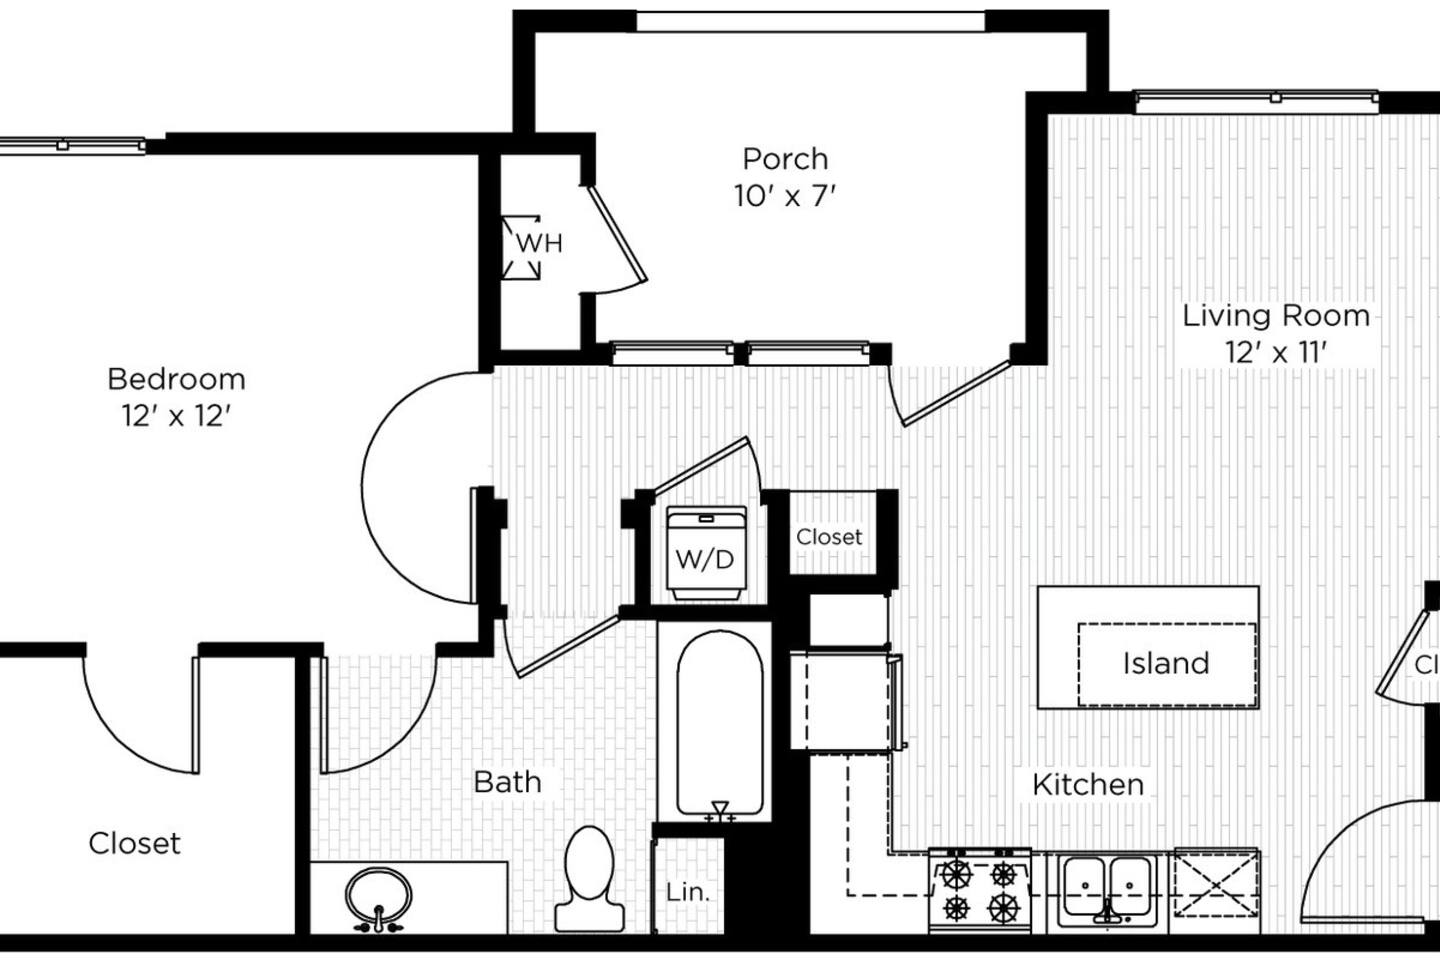 Floorplan diagram for The Aster North - 1DA, showing 1 bedroom